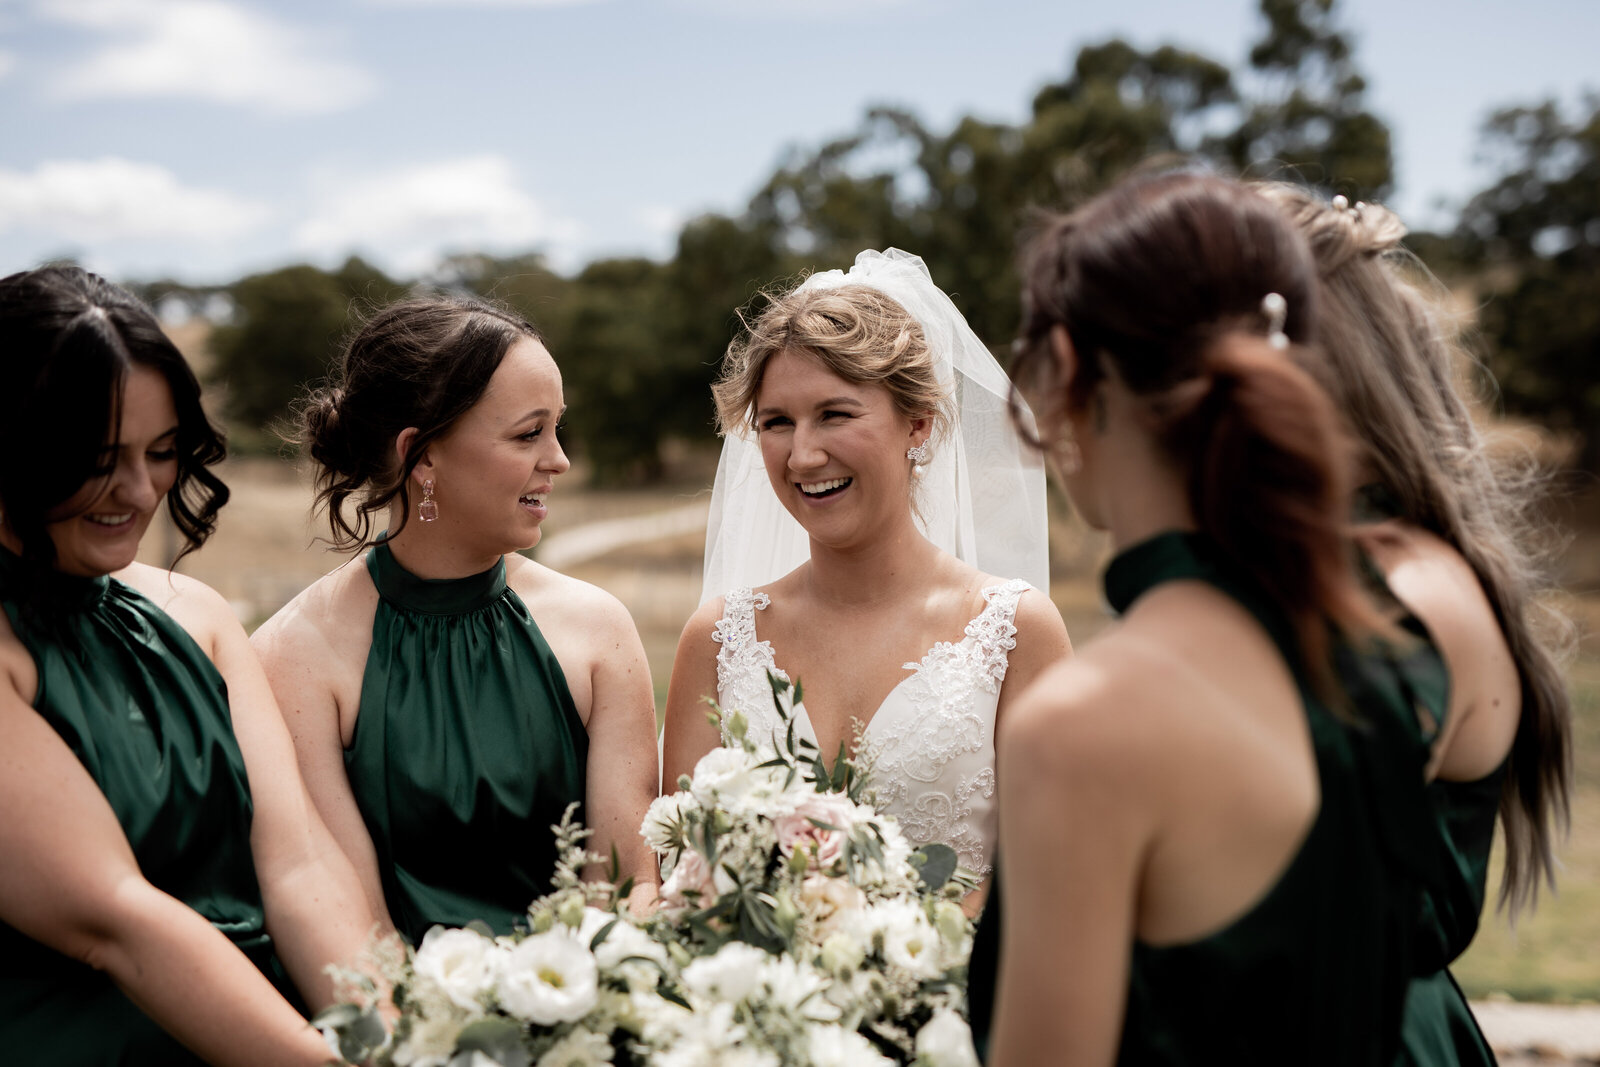 Rosie-Tom-Rexvil-Photography-Adelaide-Wedding-Photographer-295